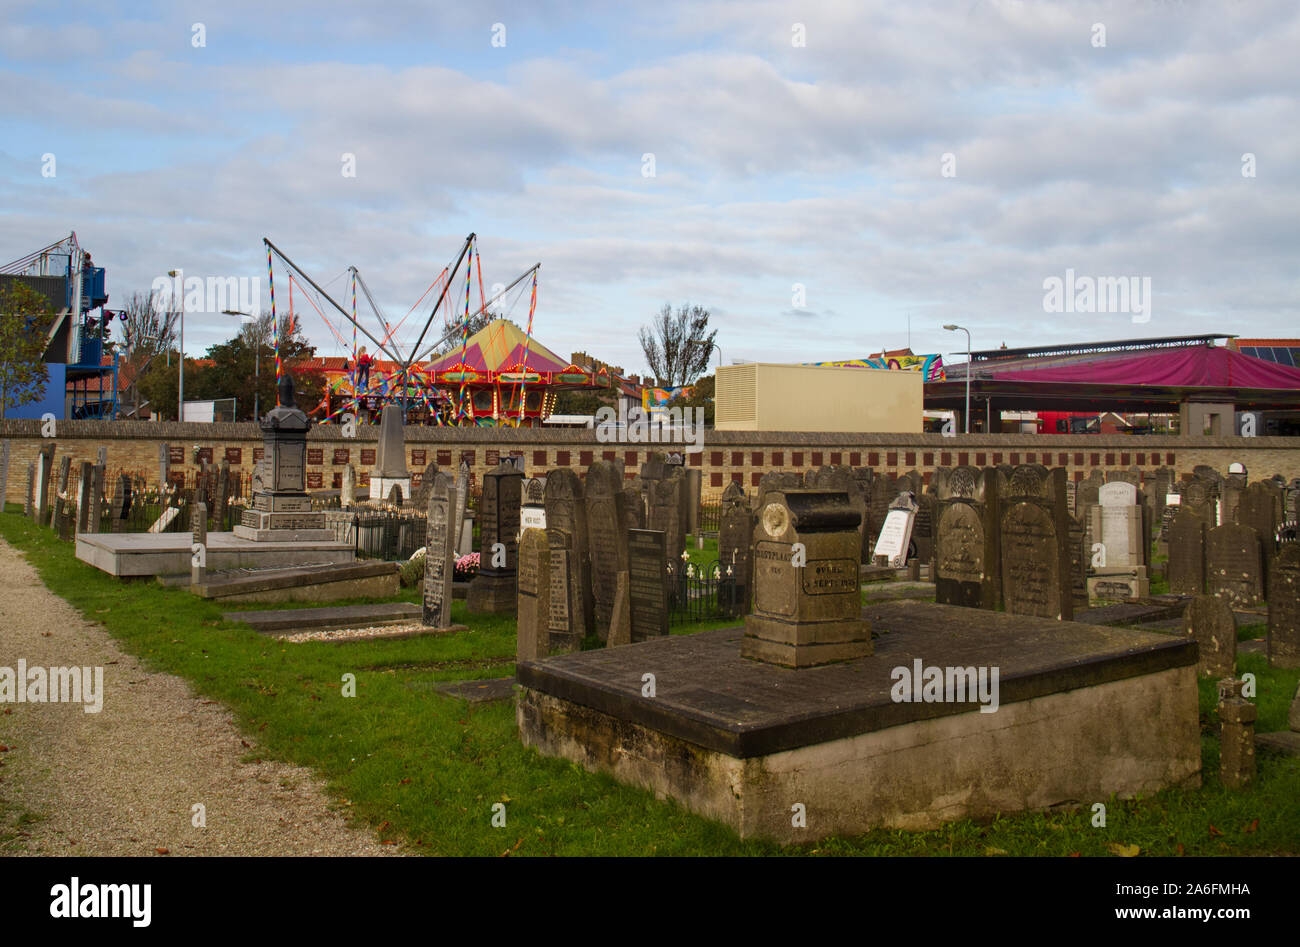 Contrast: sadness and pleasure, fairground adjecent to graveyard Stock Photo